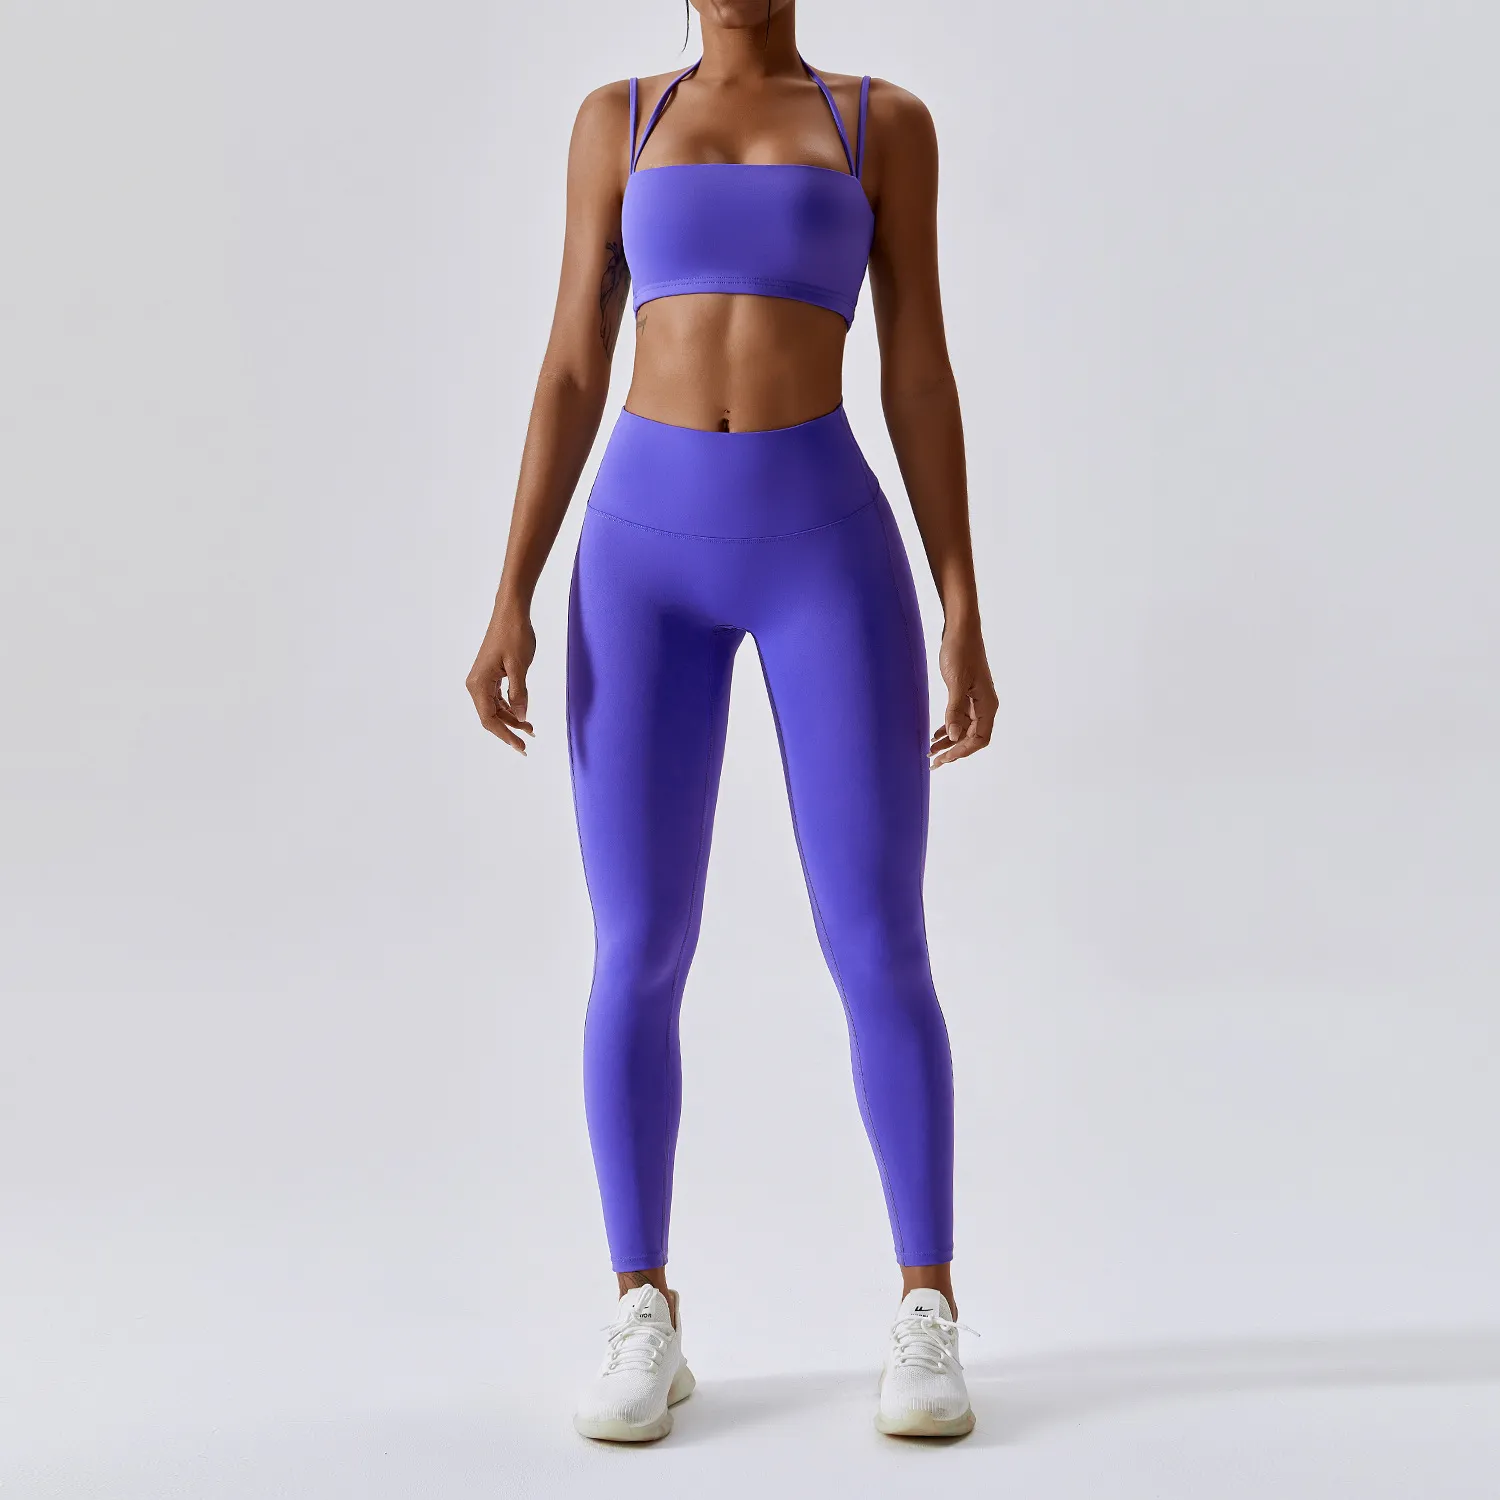 Ladies Gym Wear Sets Womens Leggings Vest Top Sports Fitness Workout Yoga  Suits 